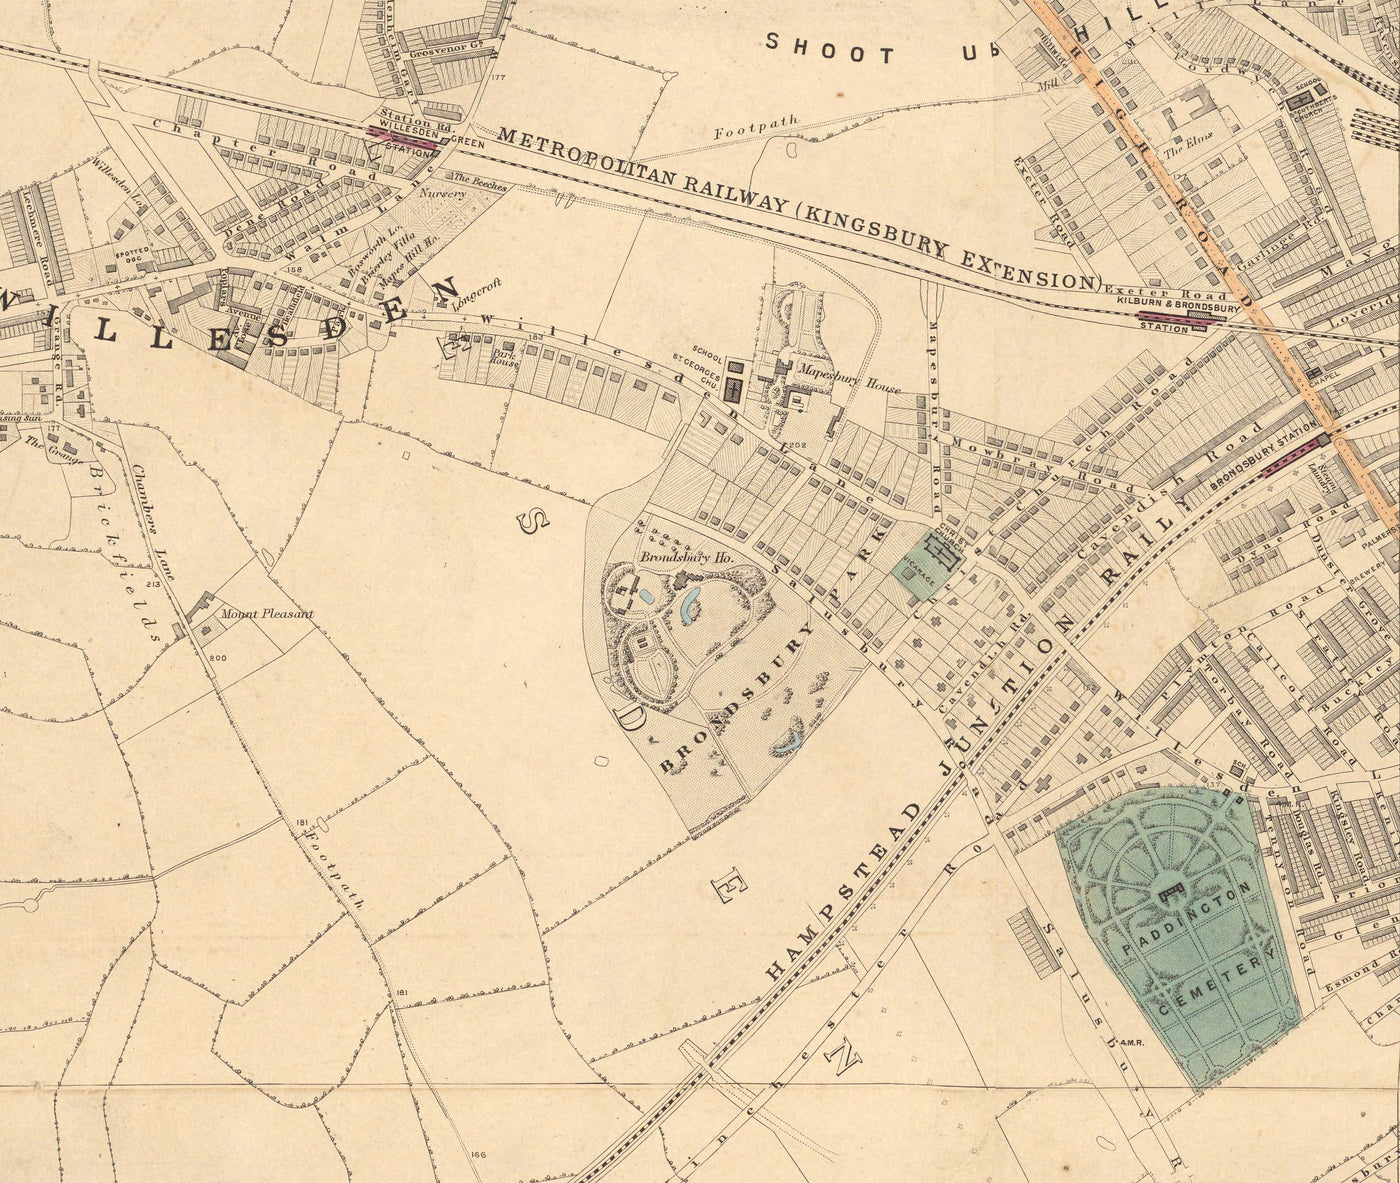 Alte Farbkarte von West London, 1862 - St Johns Wood, Kilburn, Kensal Green, Finchley Rd, Willesden - NW6, NW8, NW2, W9, W10, NW10